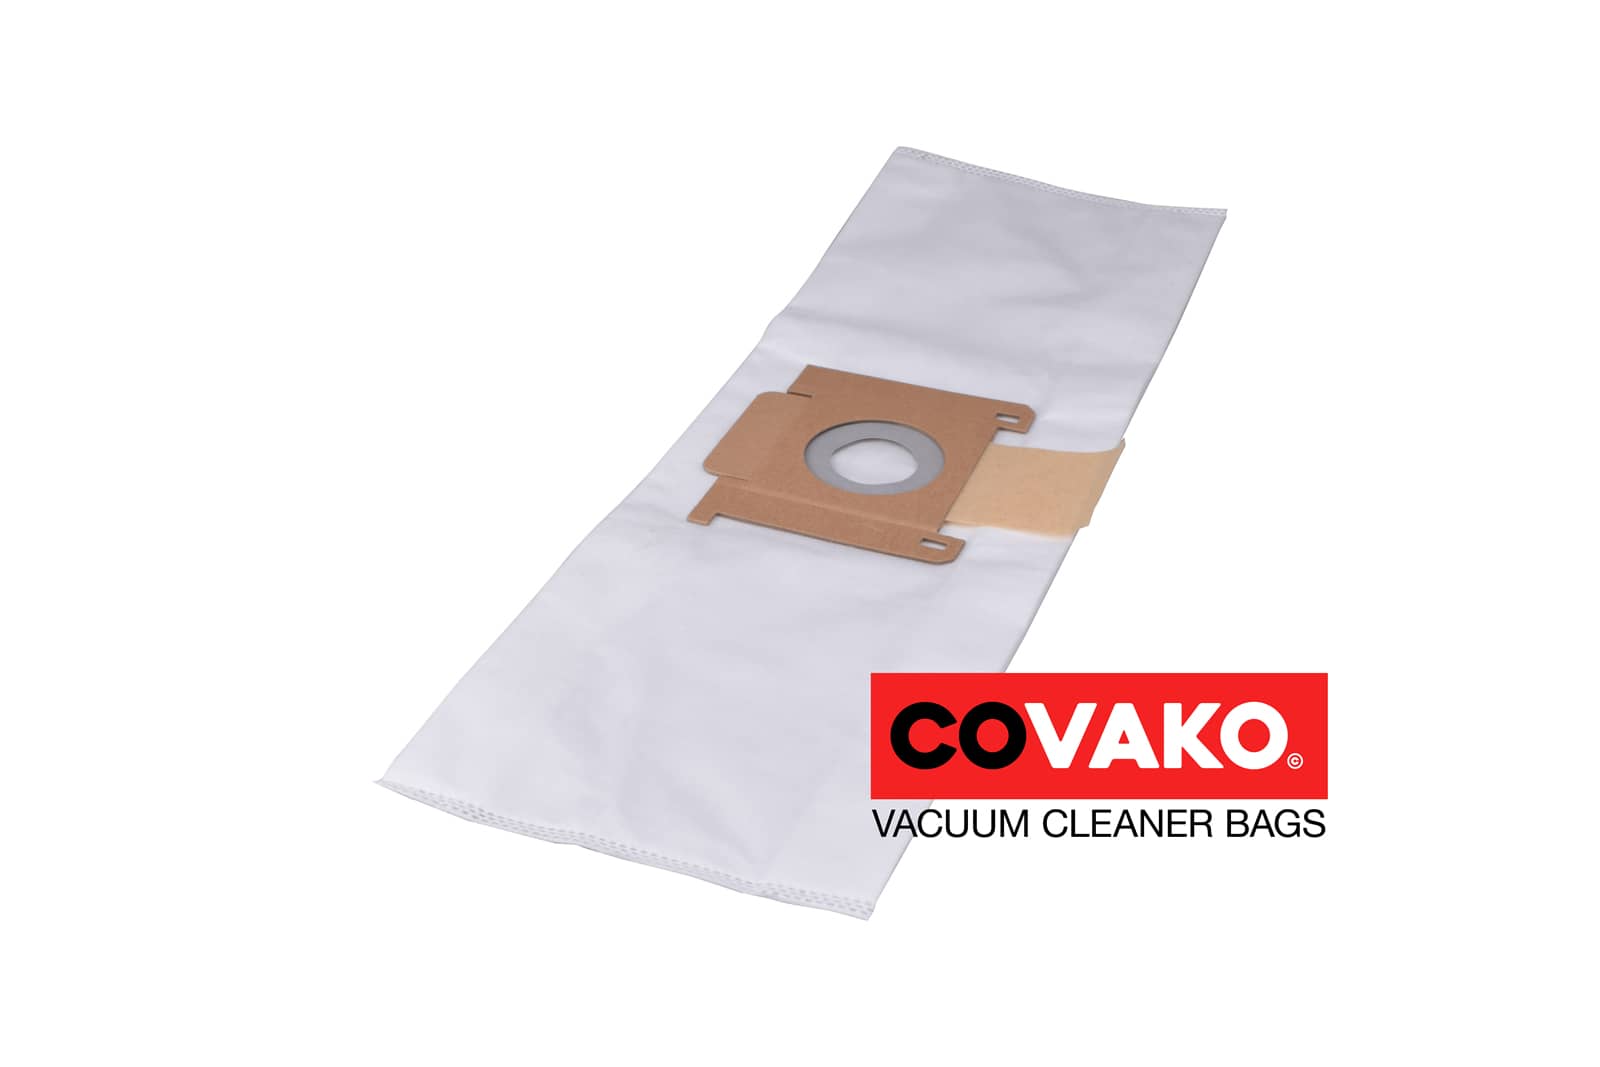 Clean a la Card C 5 / Synthesis - Clean a la Card vacuum cleaner bags